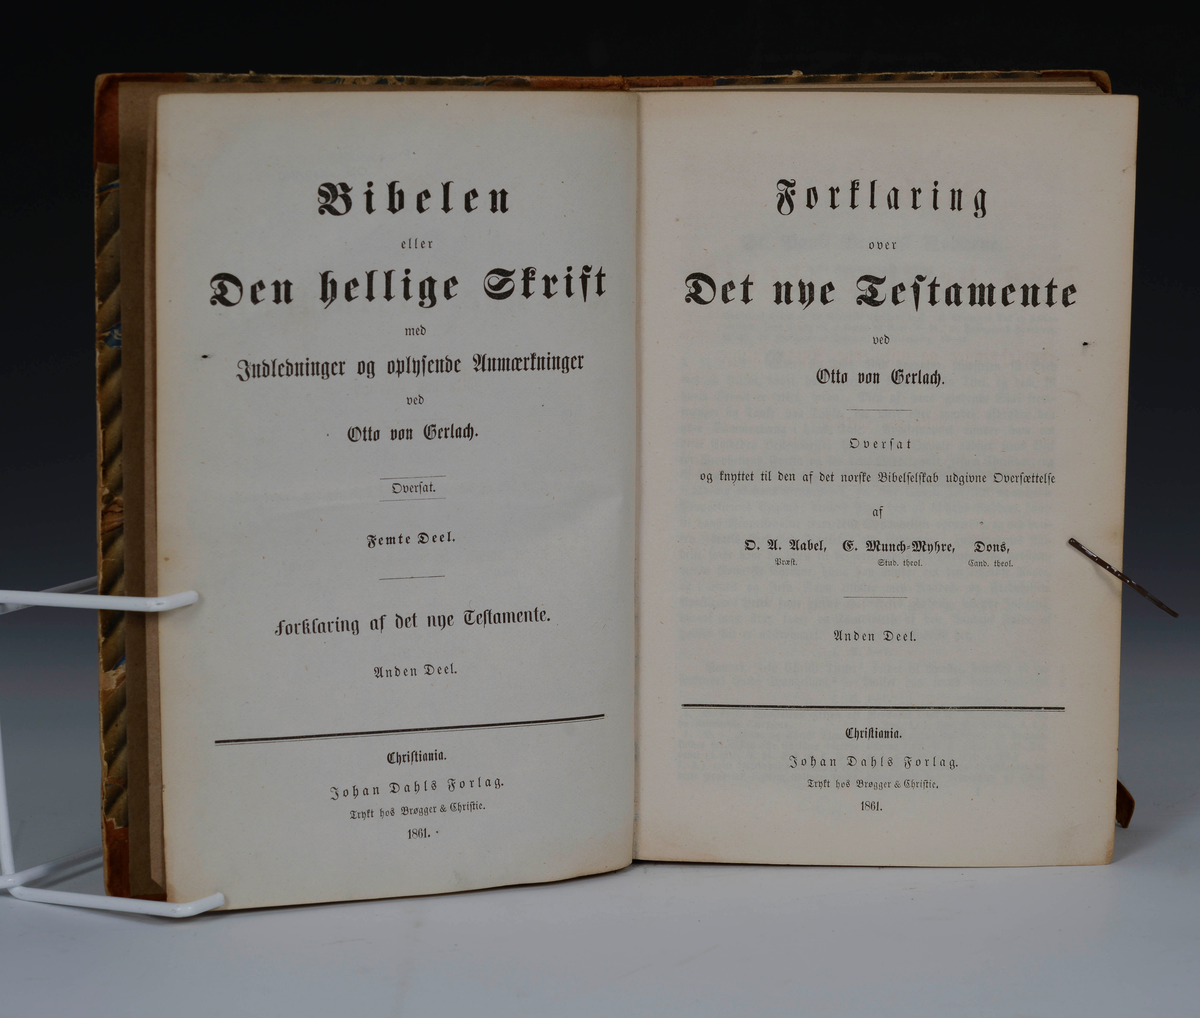 Gerlach, Otto von. Forklaring over det nye Testamentet overs. I-II. Chr. a. 1857-61 (Innb.)
